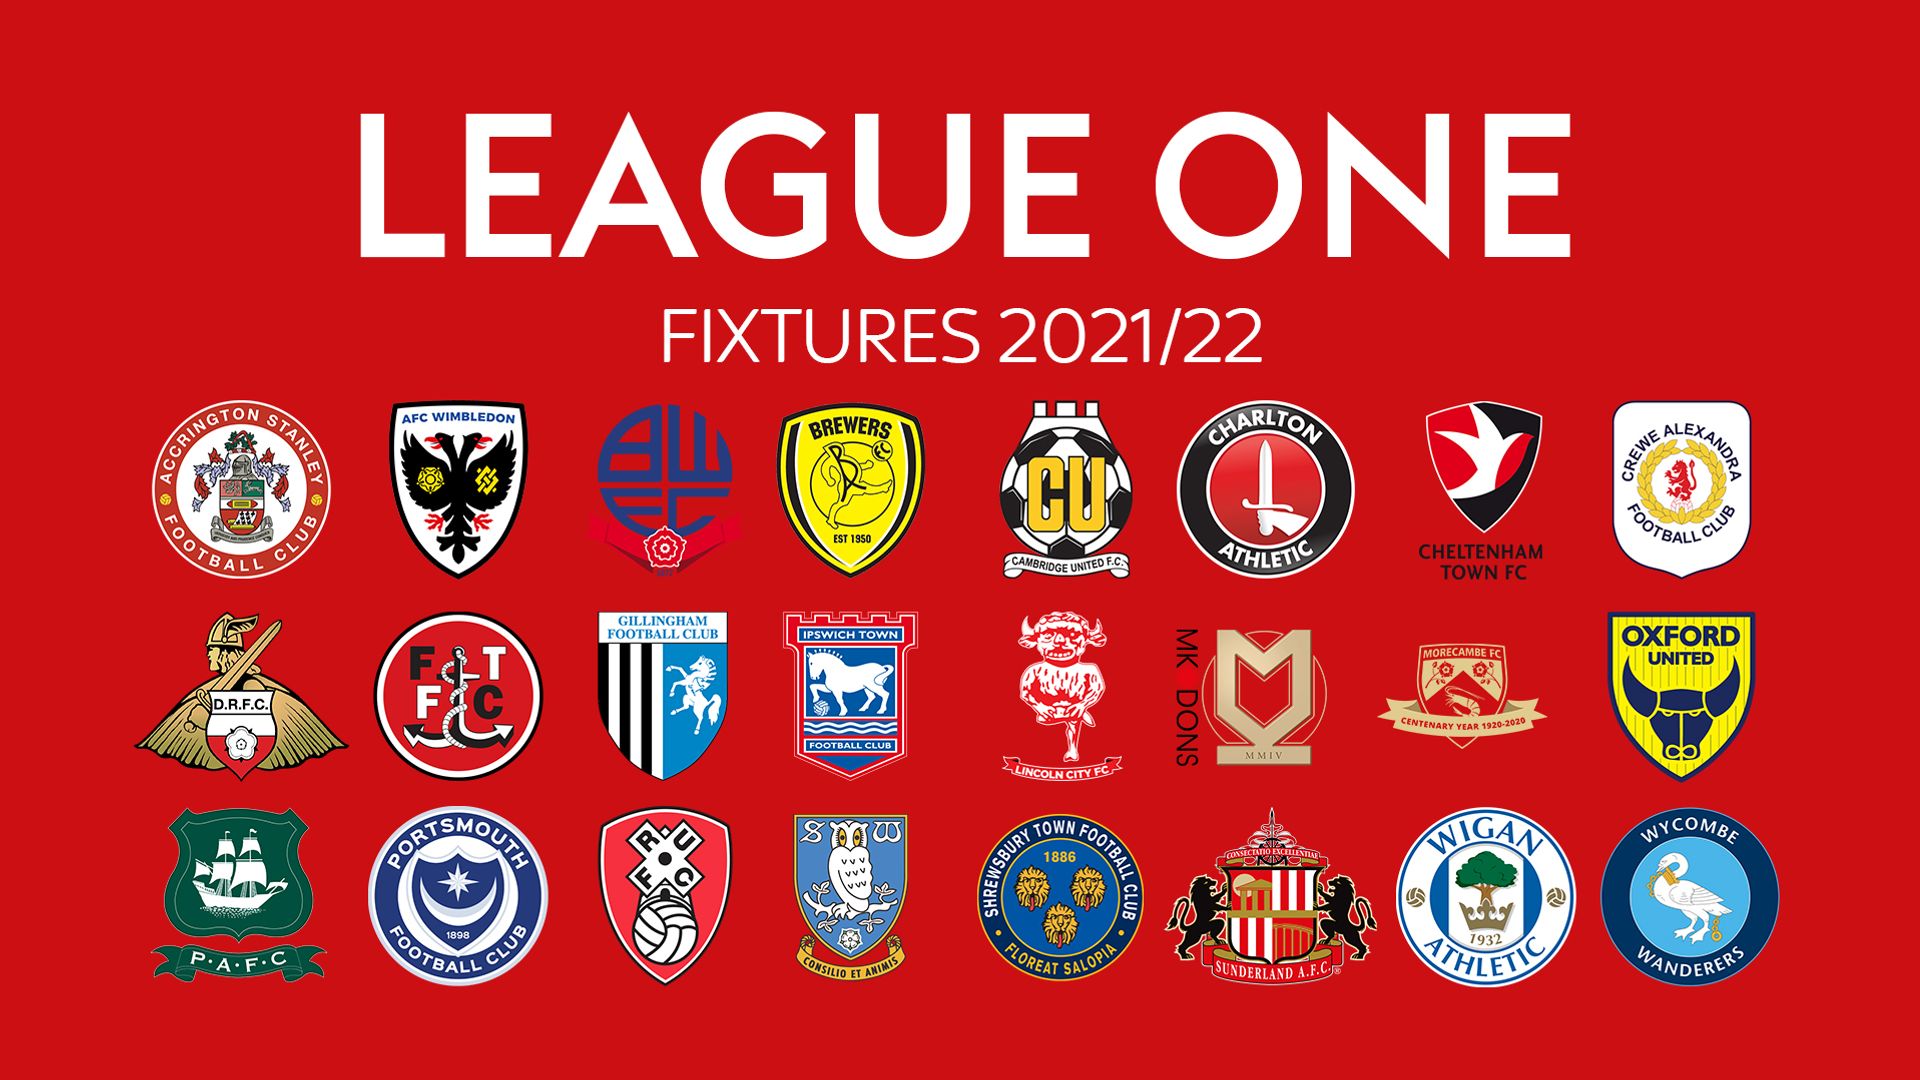 League One fixtures 2021/22: Sunderland-Wigan on opening weekend